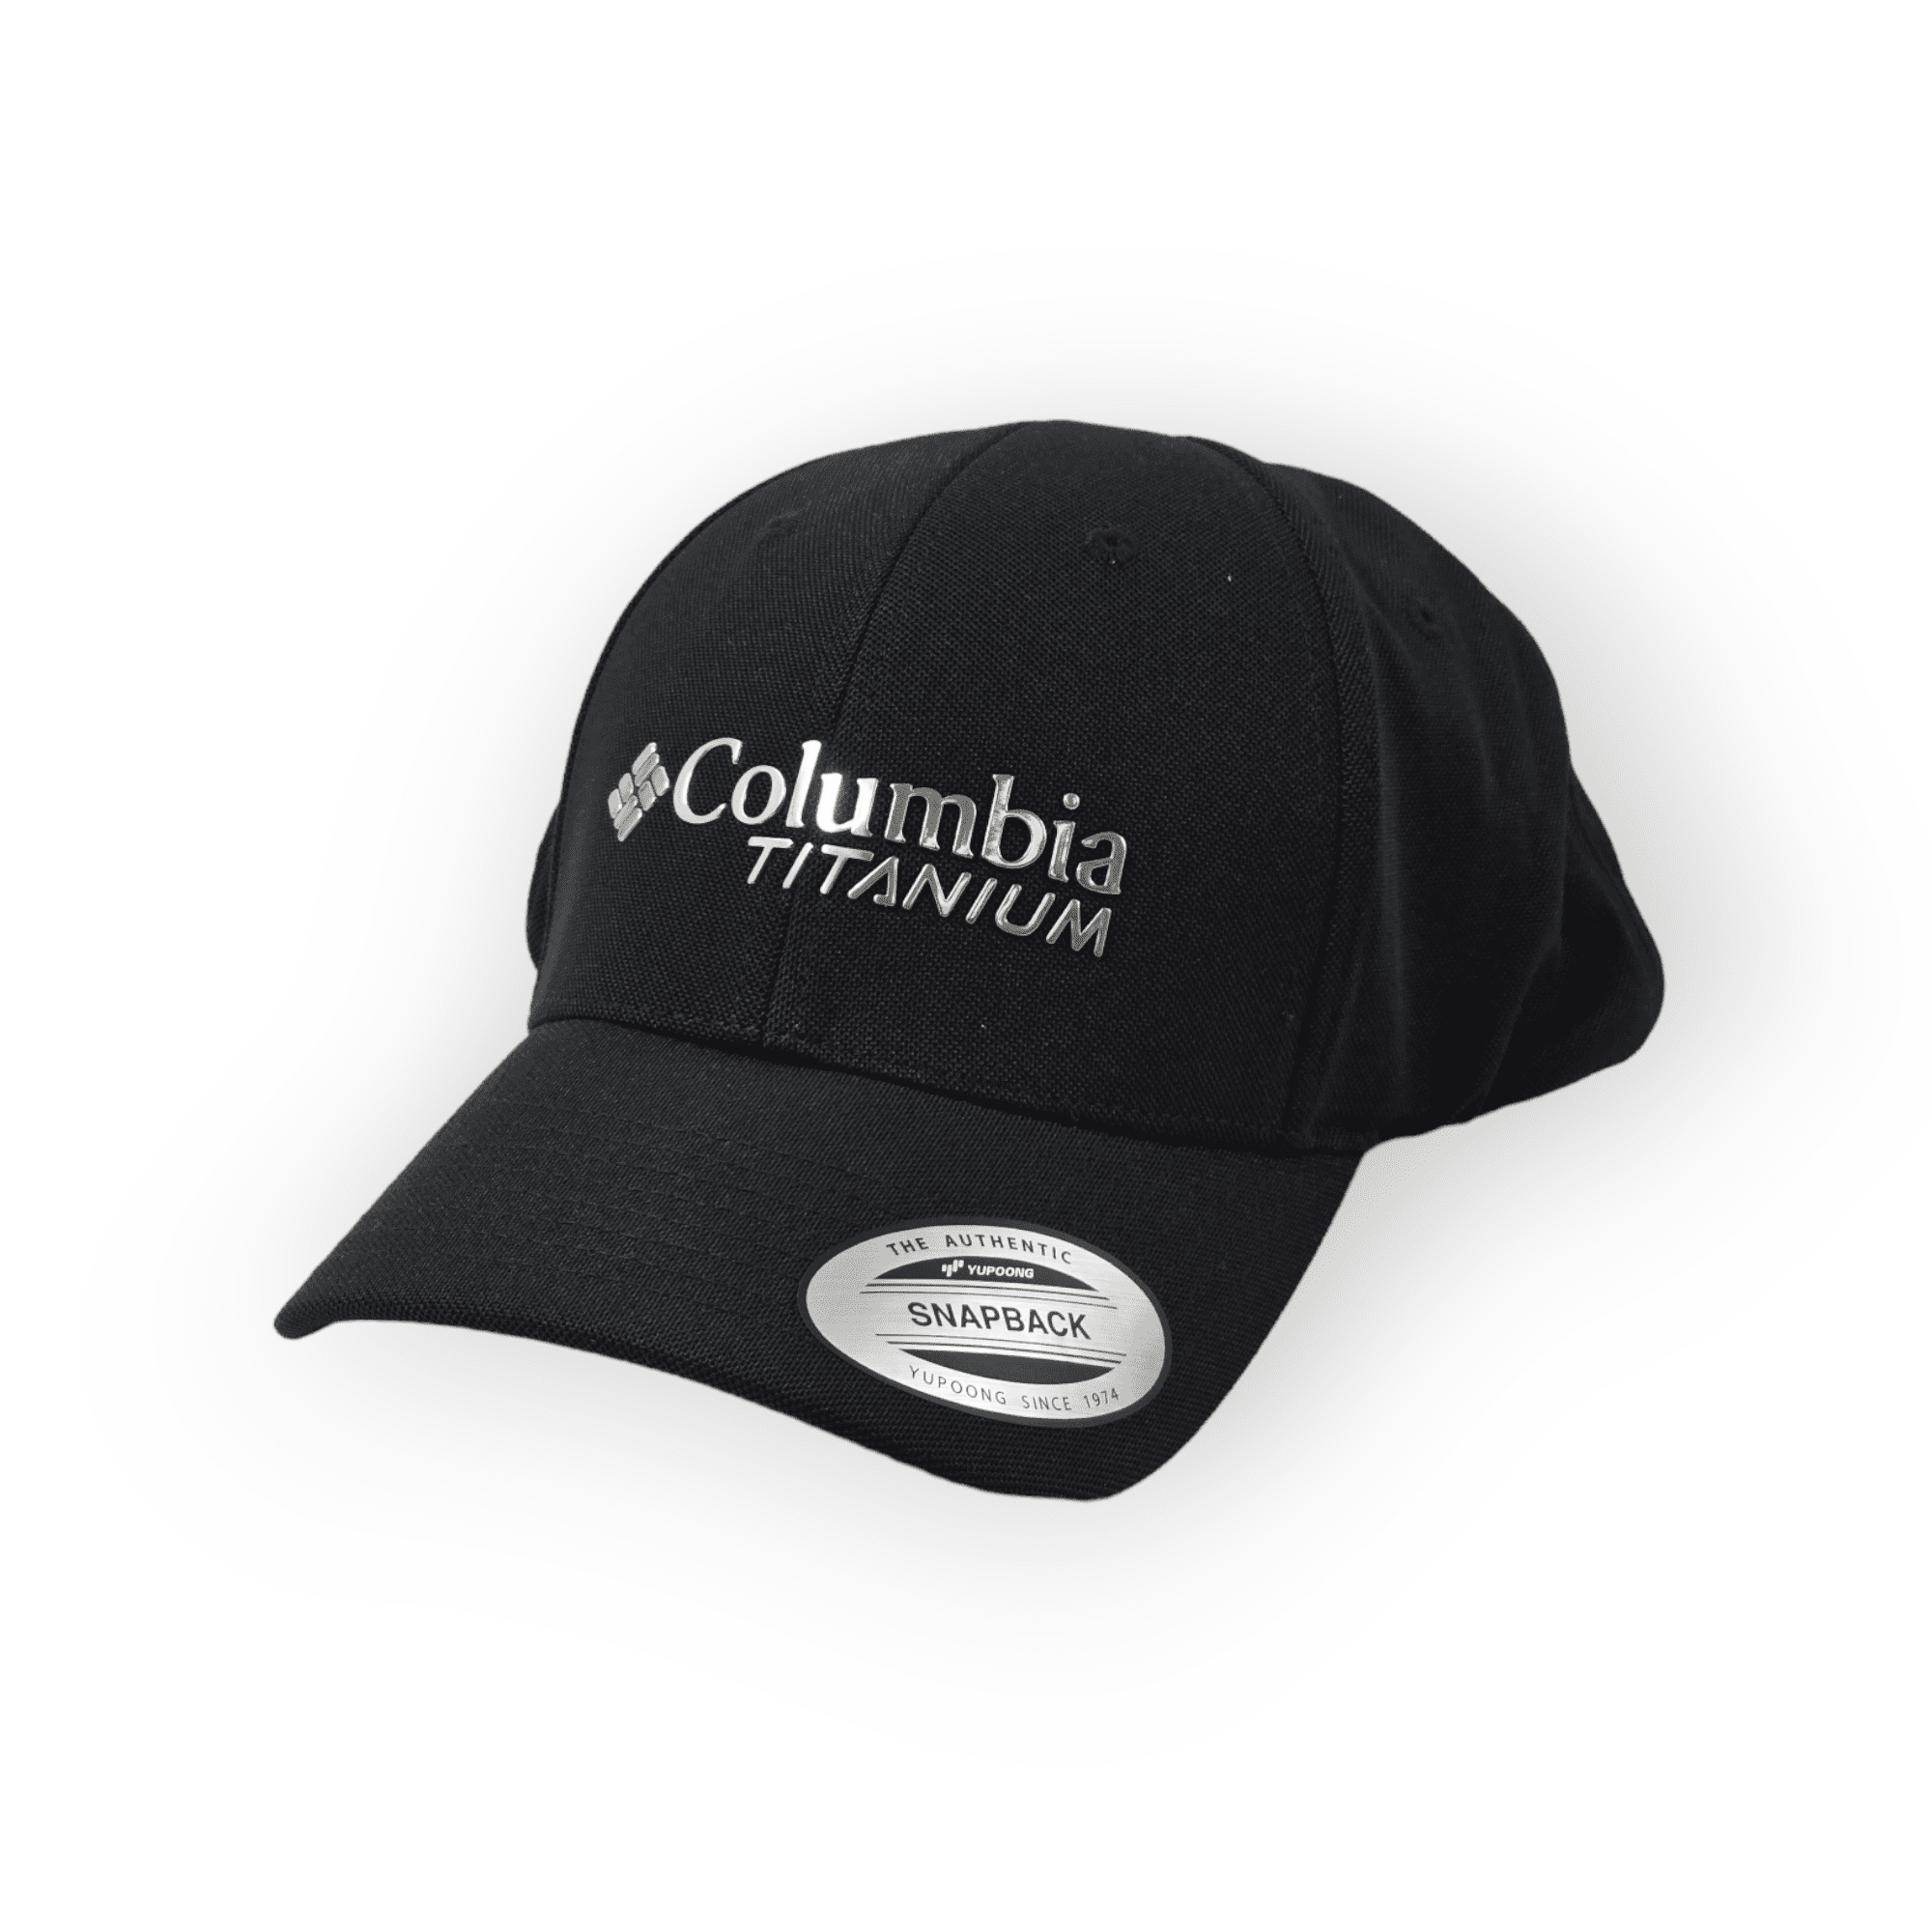 כובע COLUMBIA TITANIUM